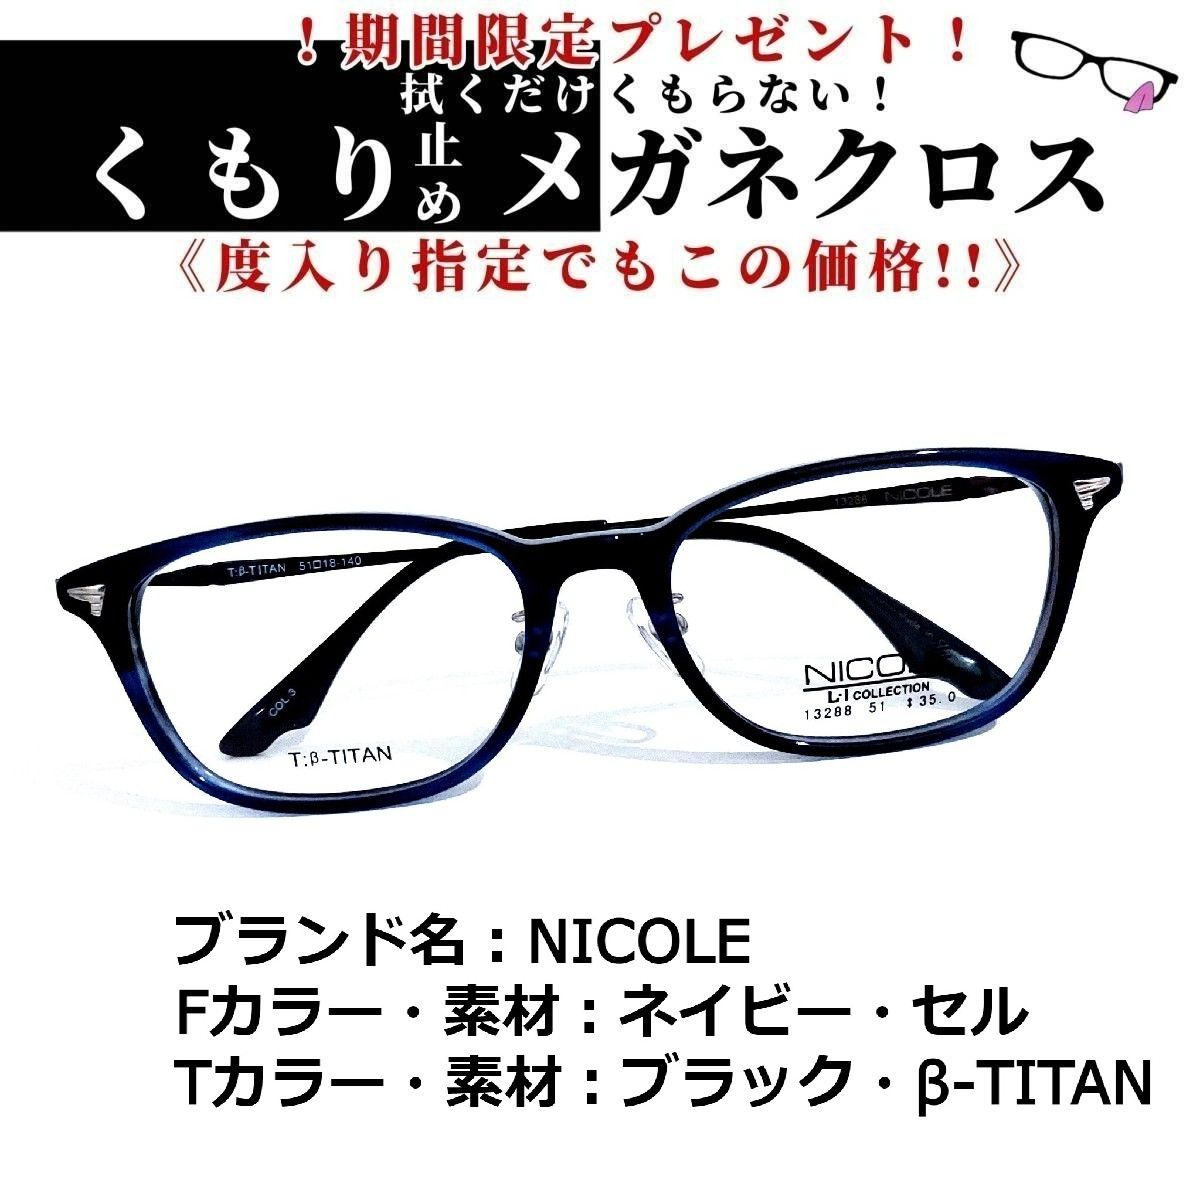 No.1607+メガネ NICOLE【度数入り込み価格】-